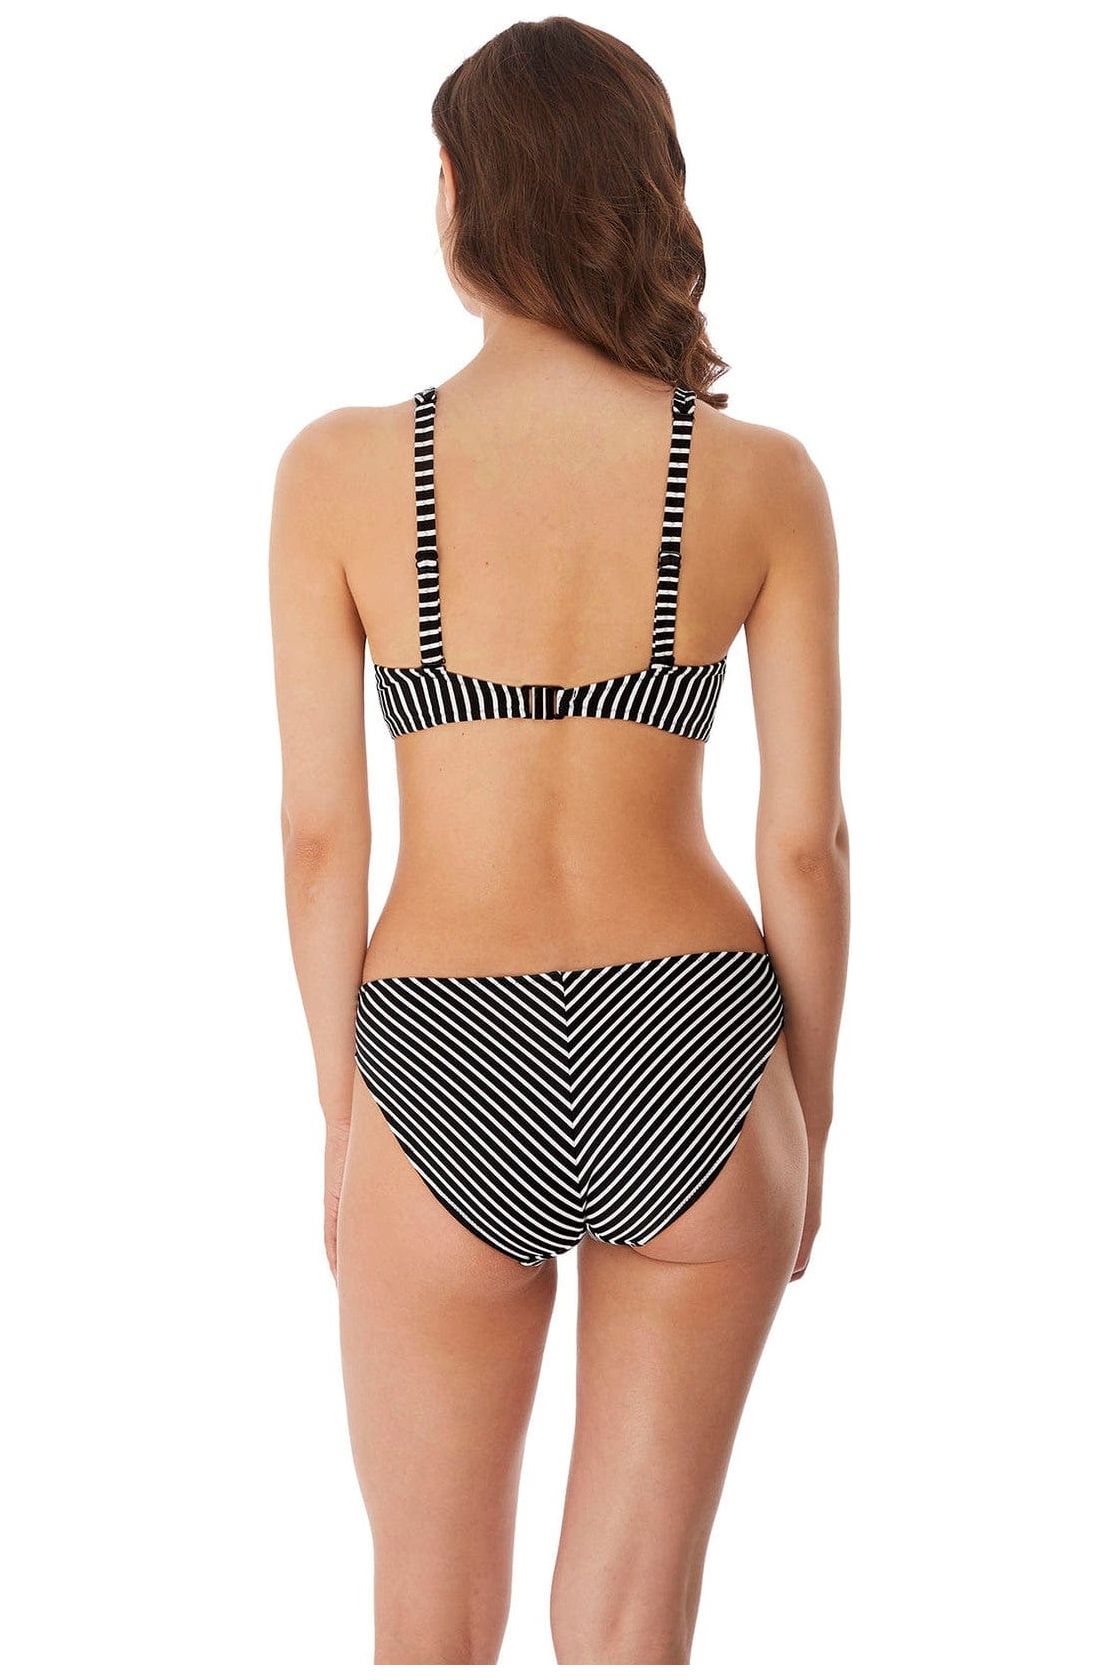 Beach Hut Bikini Brief - Freya - Splash Swimwear  - Bikini Bottoms, freya - Splash Swimwear 